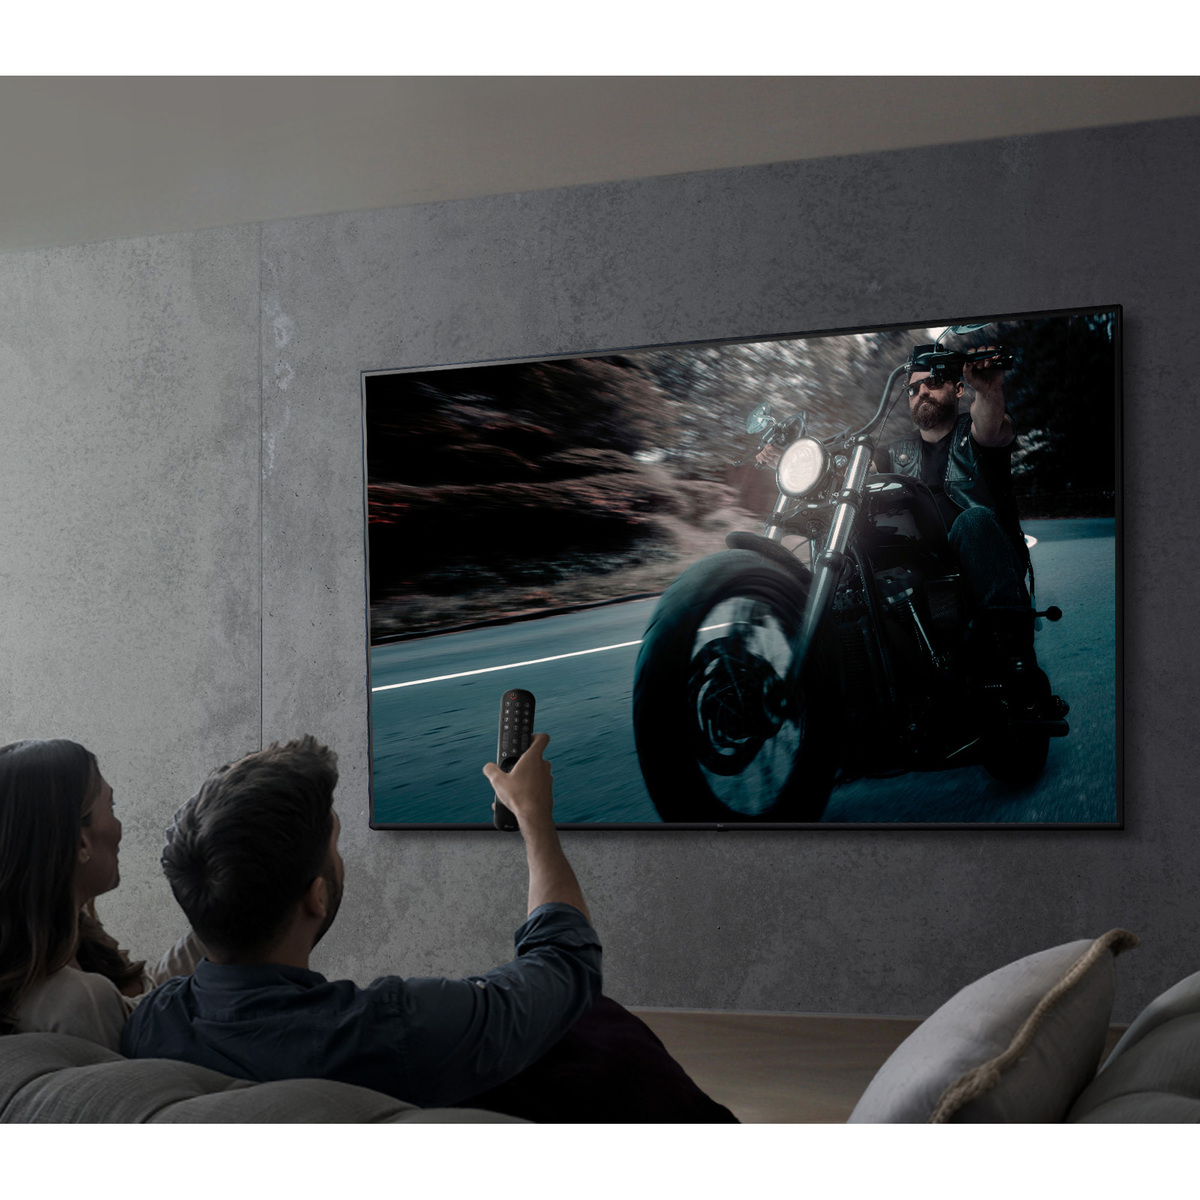 LG 75 Inches 4K Smart UHD TV, Black, 75UR80006LJ-AMRE